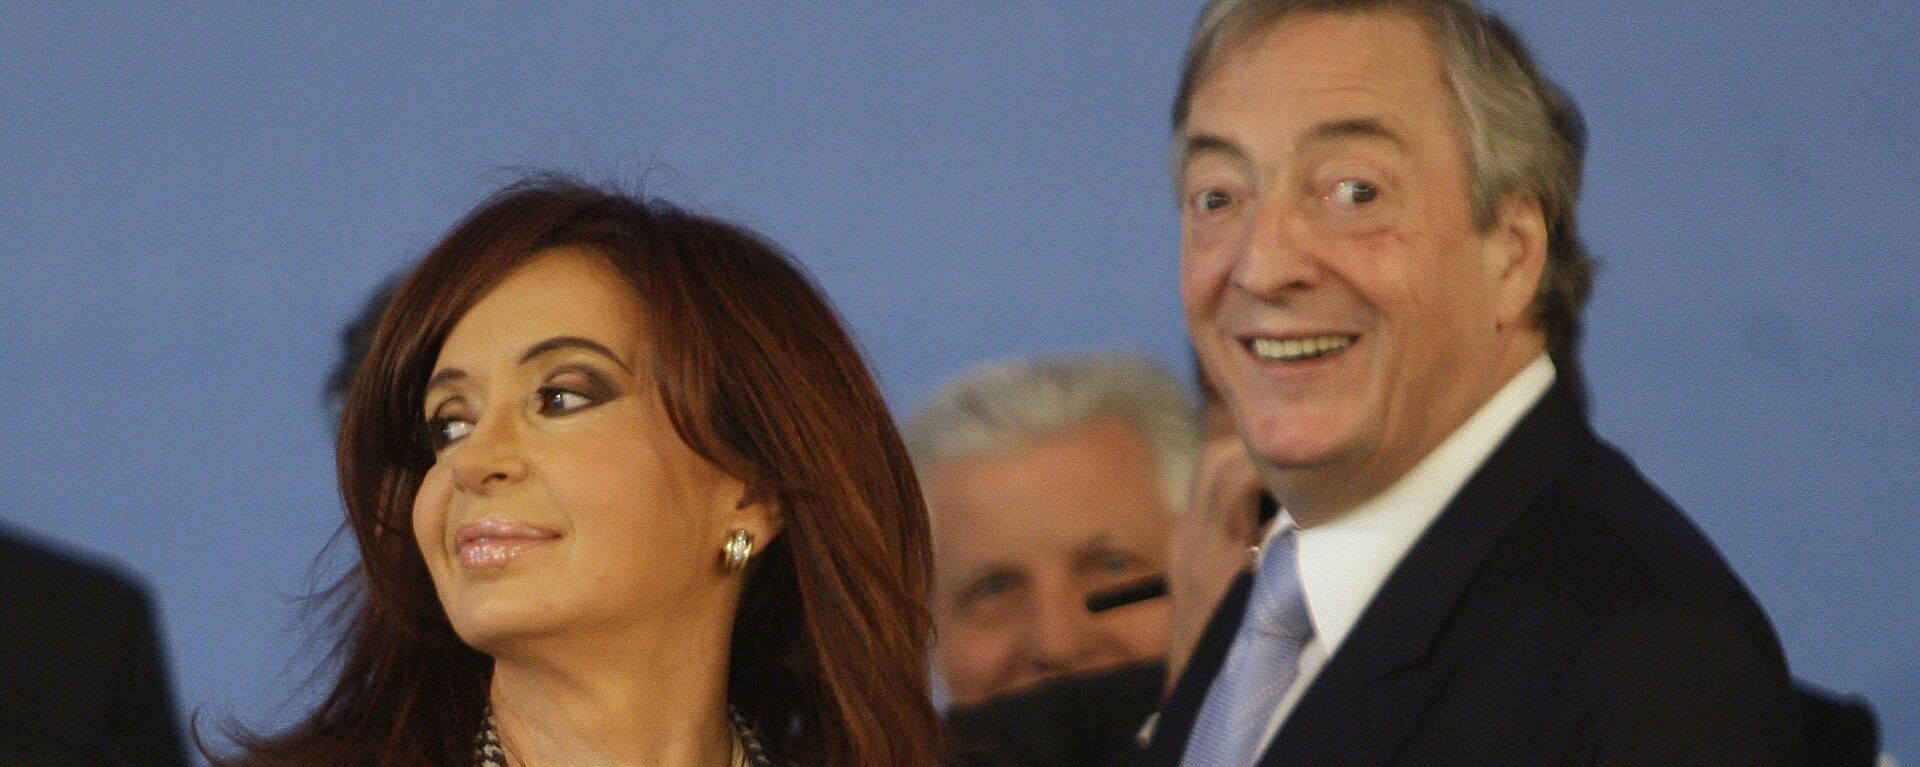 La vicepresidenta y exmandataria Cristina Fernández de Kirchner, y su esposo, expresidente de Argentina, Néstor Kirchner - Sputnik Mundo, 1920, 25.05.2023